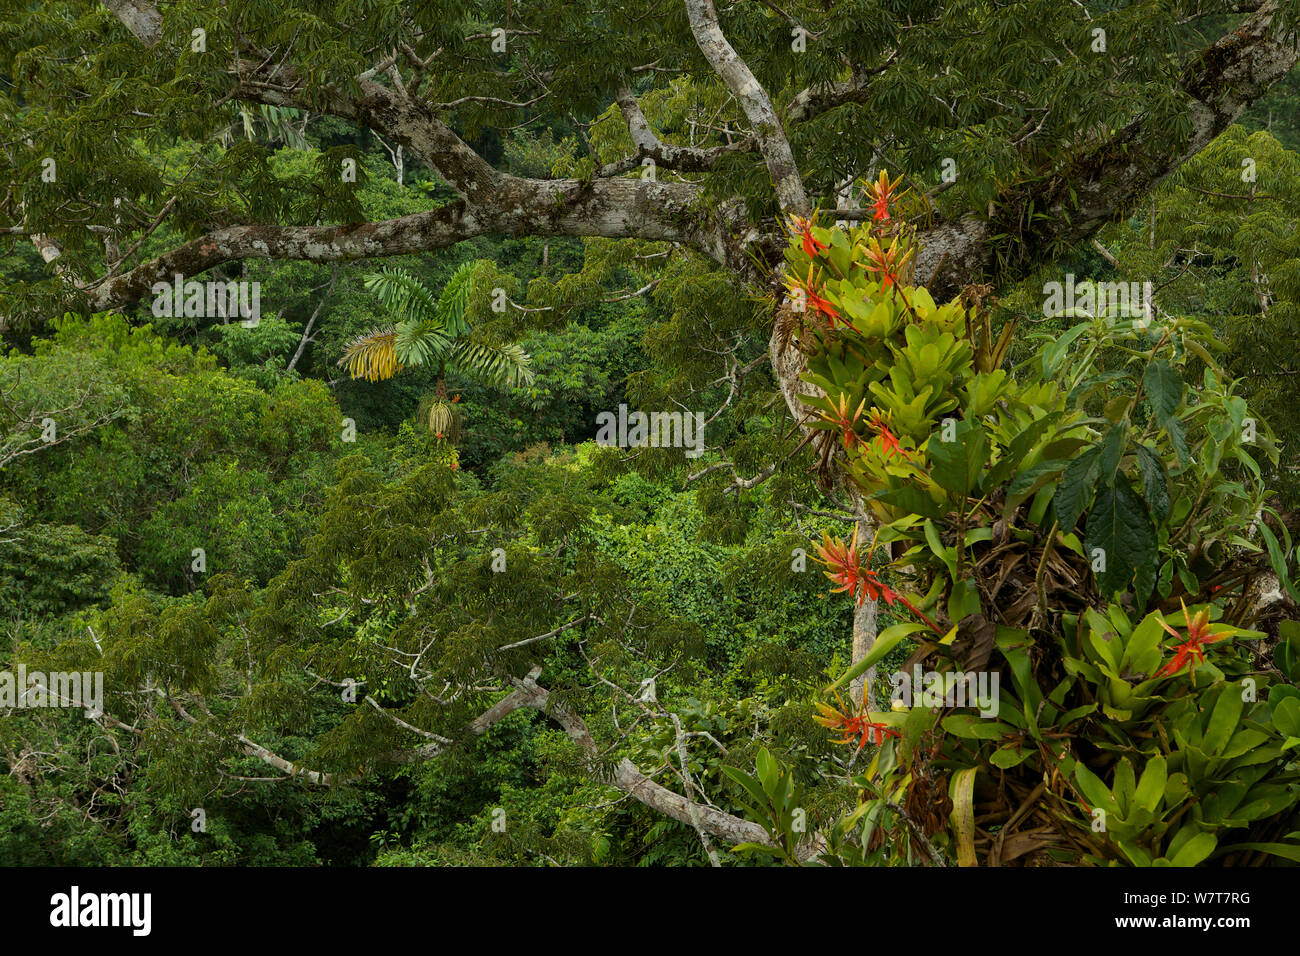 Amazon rainforest canopy view with flowering Bromeliad epiphytes growing on a branch of a giant Cieba tree. Tiputini Biodiversity Station, Amazon Rainforest, Ecuador, January. Stock Photo